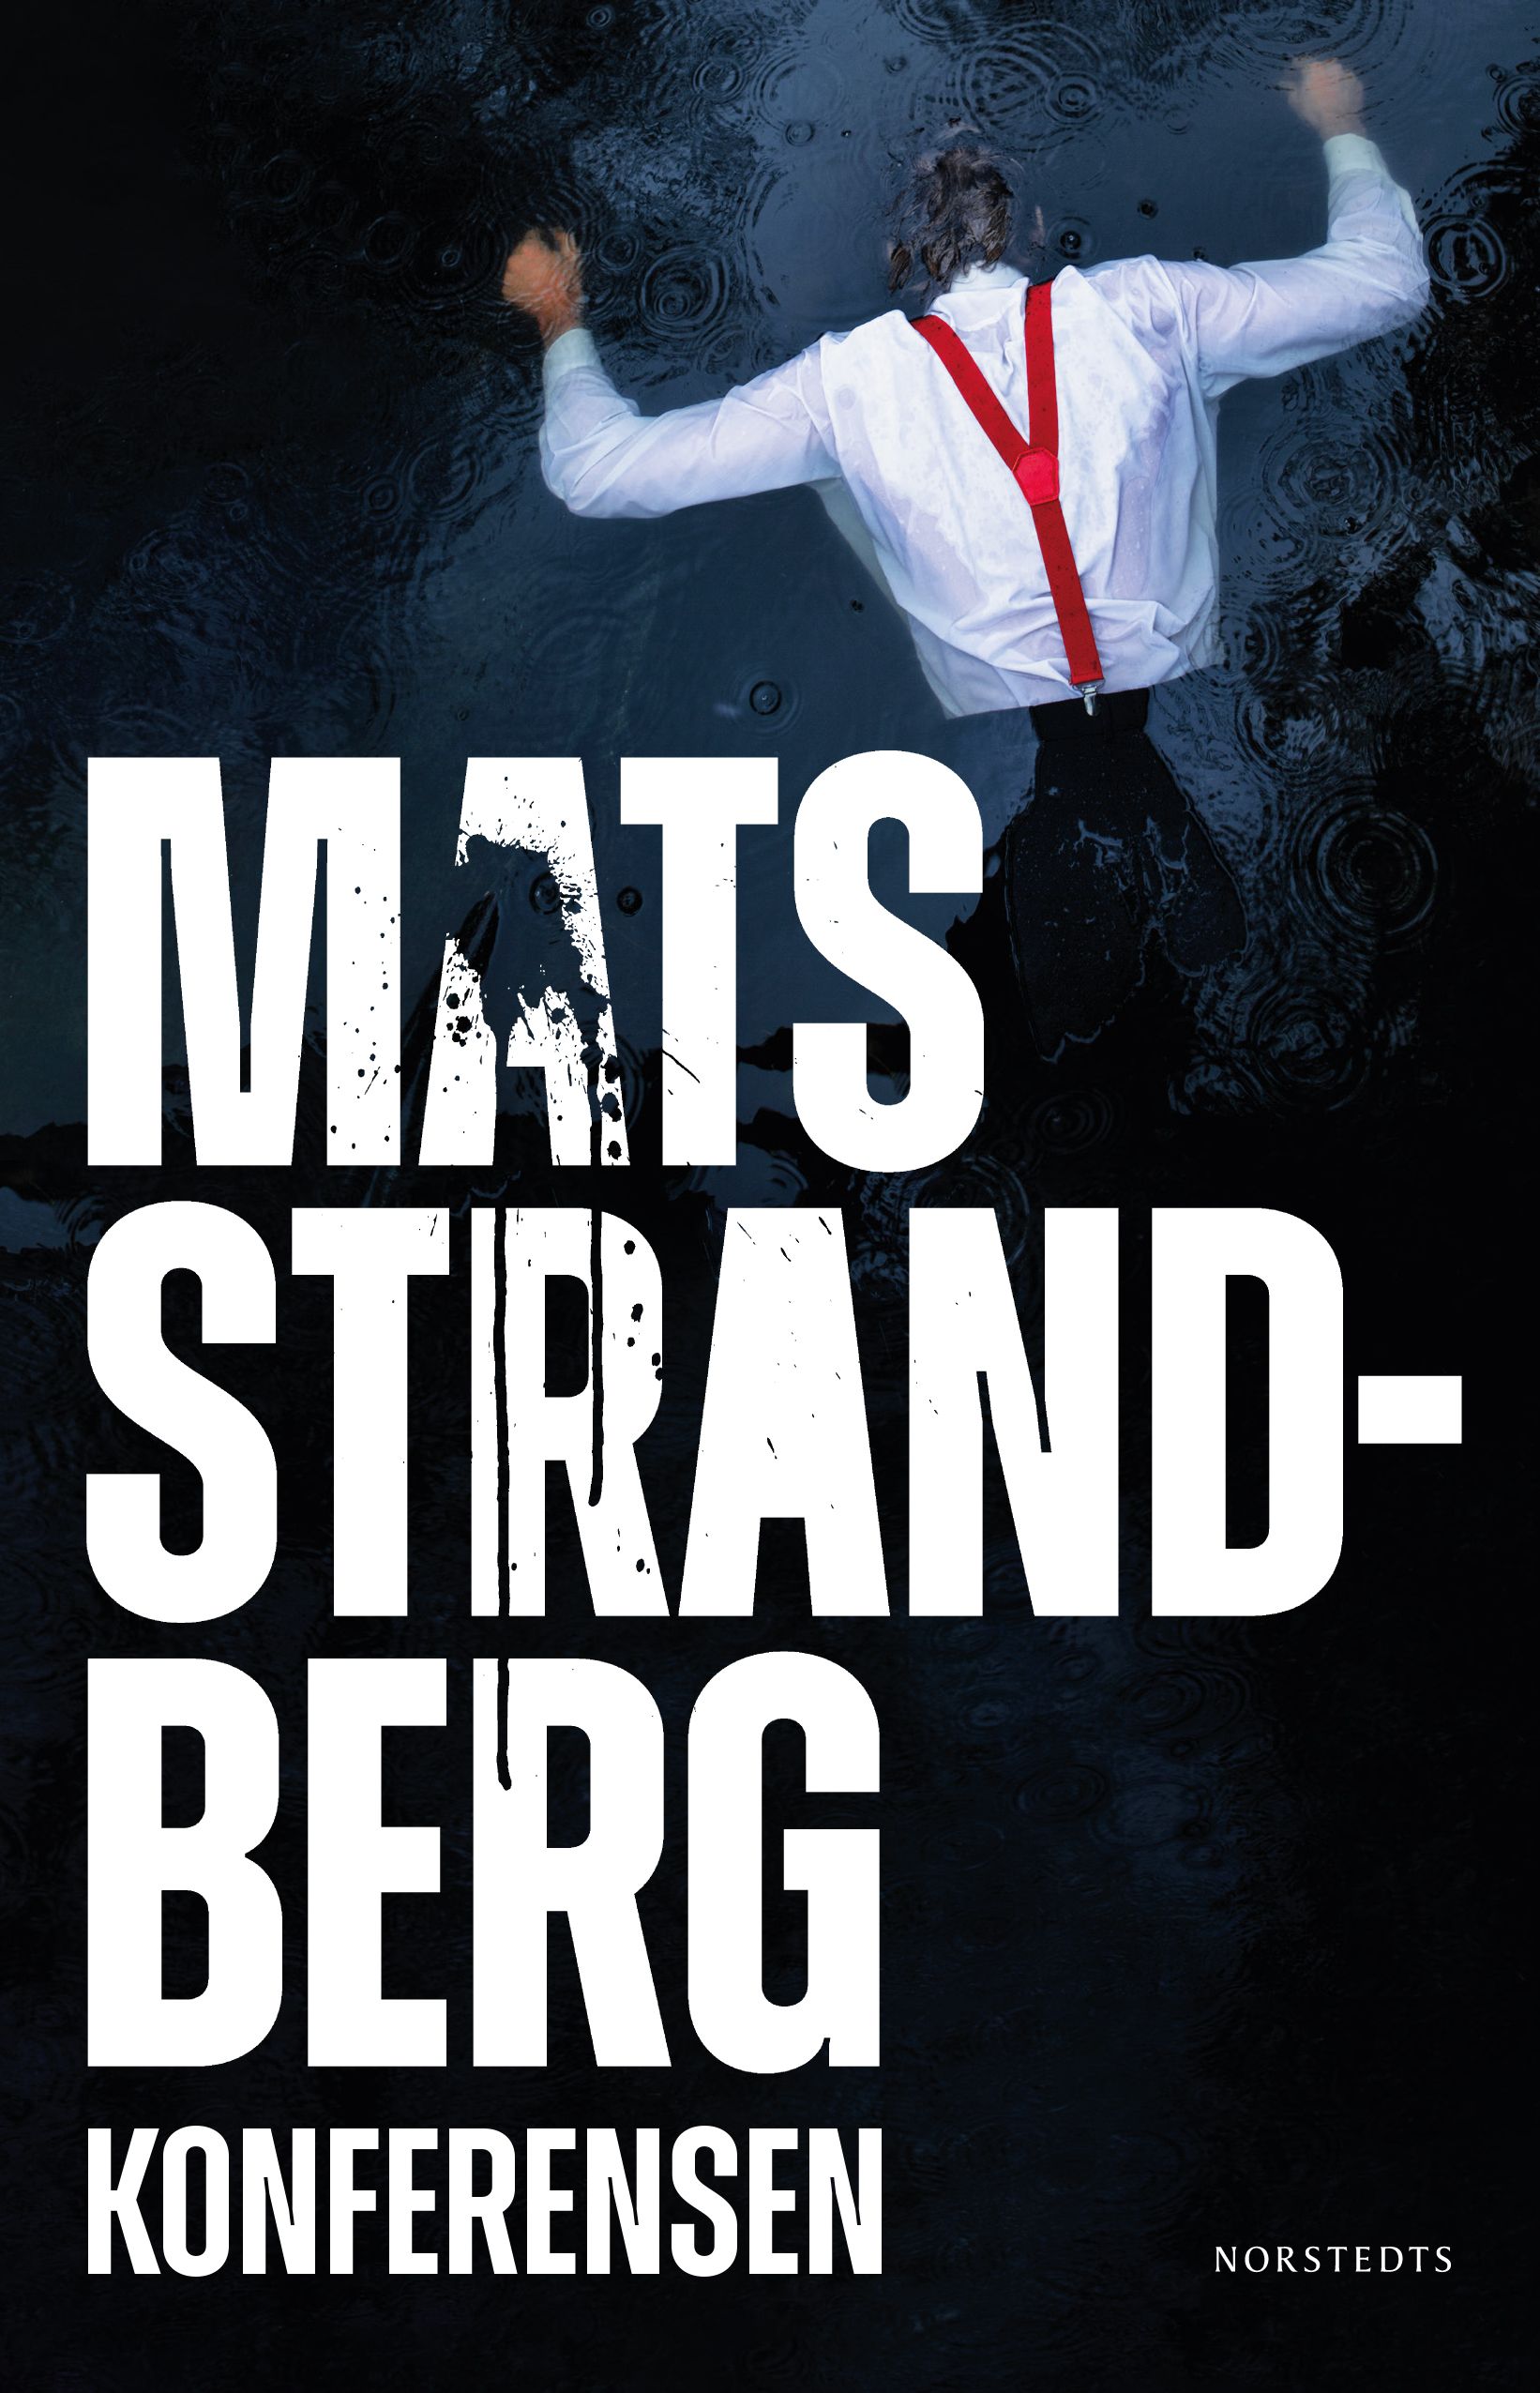 Konferensen, e-bok av Mats Strandberg